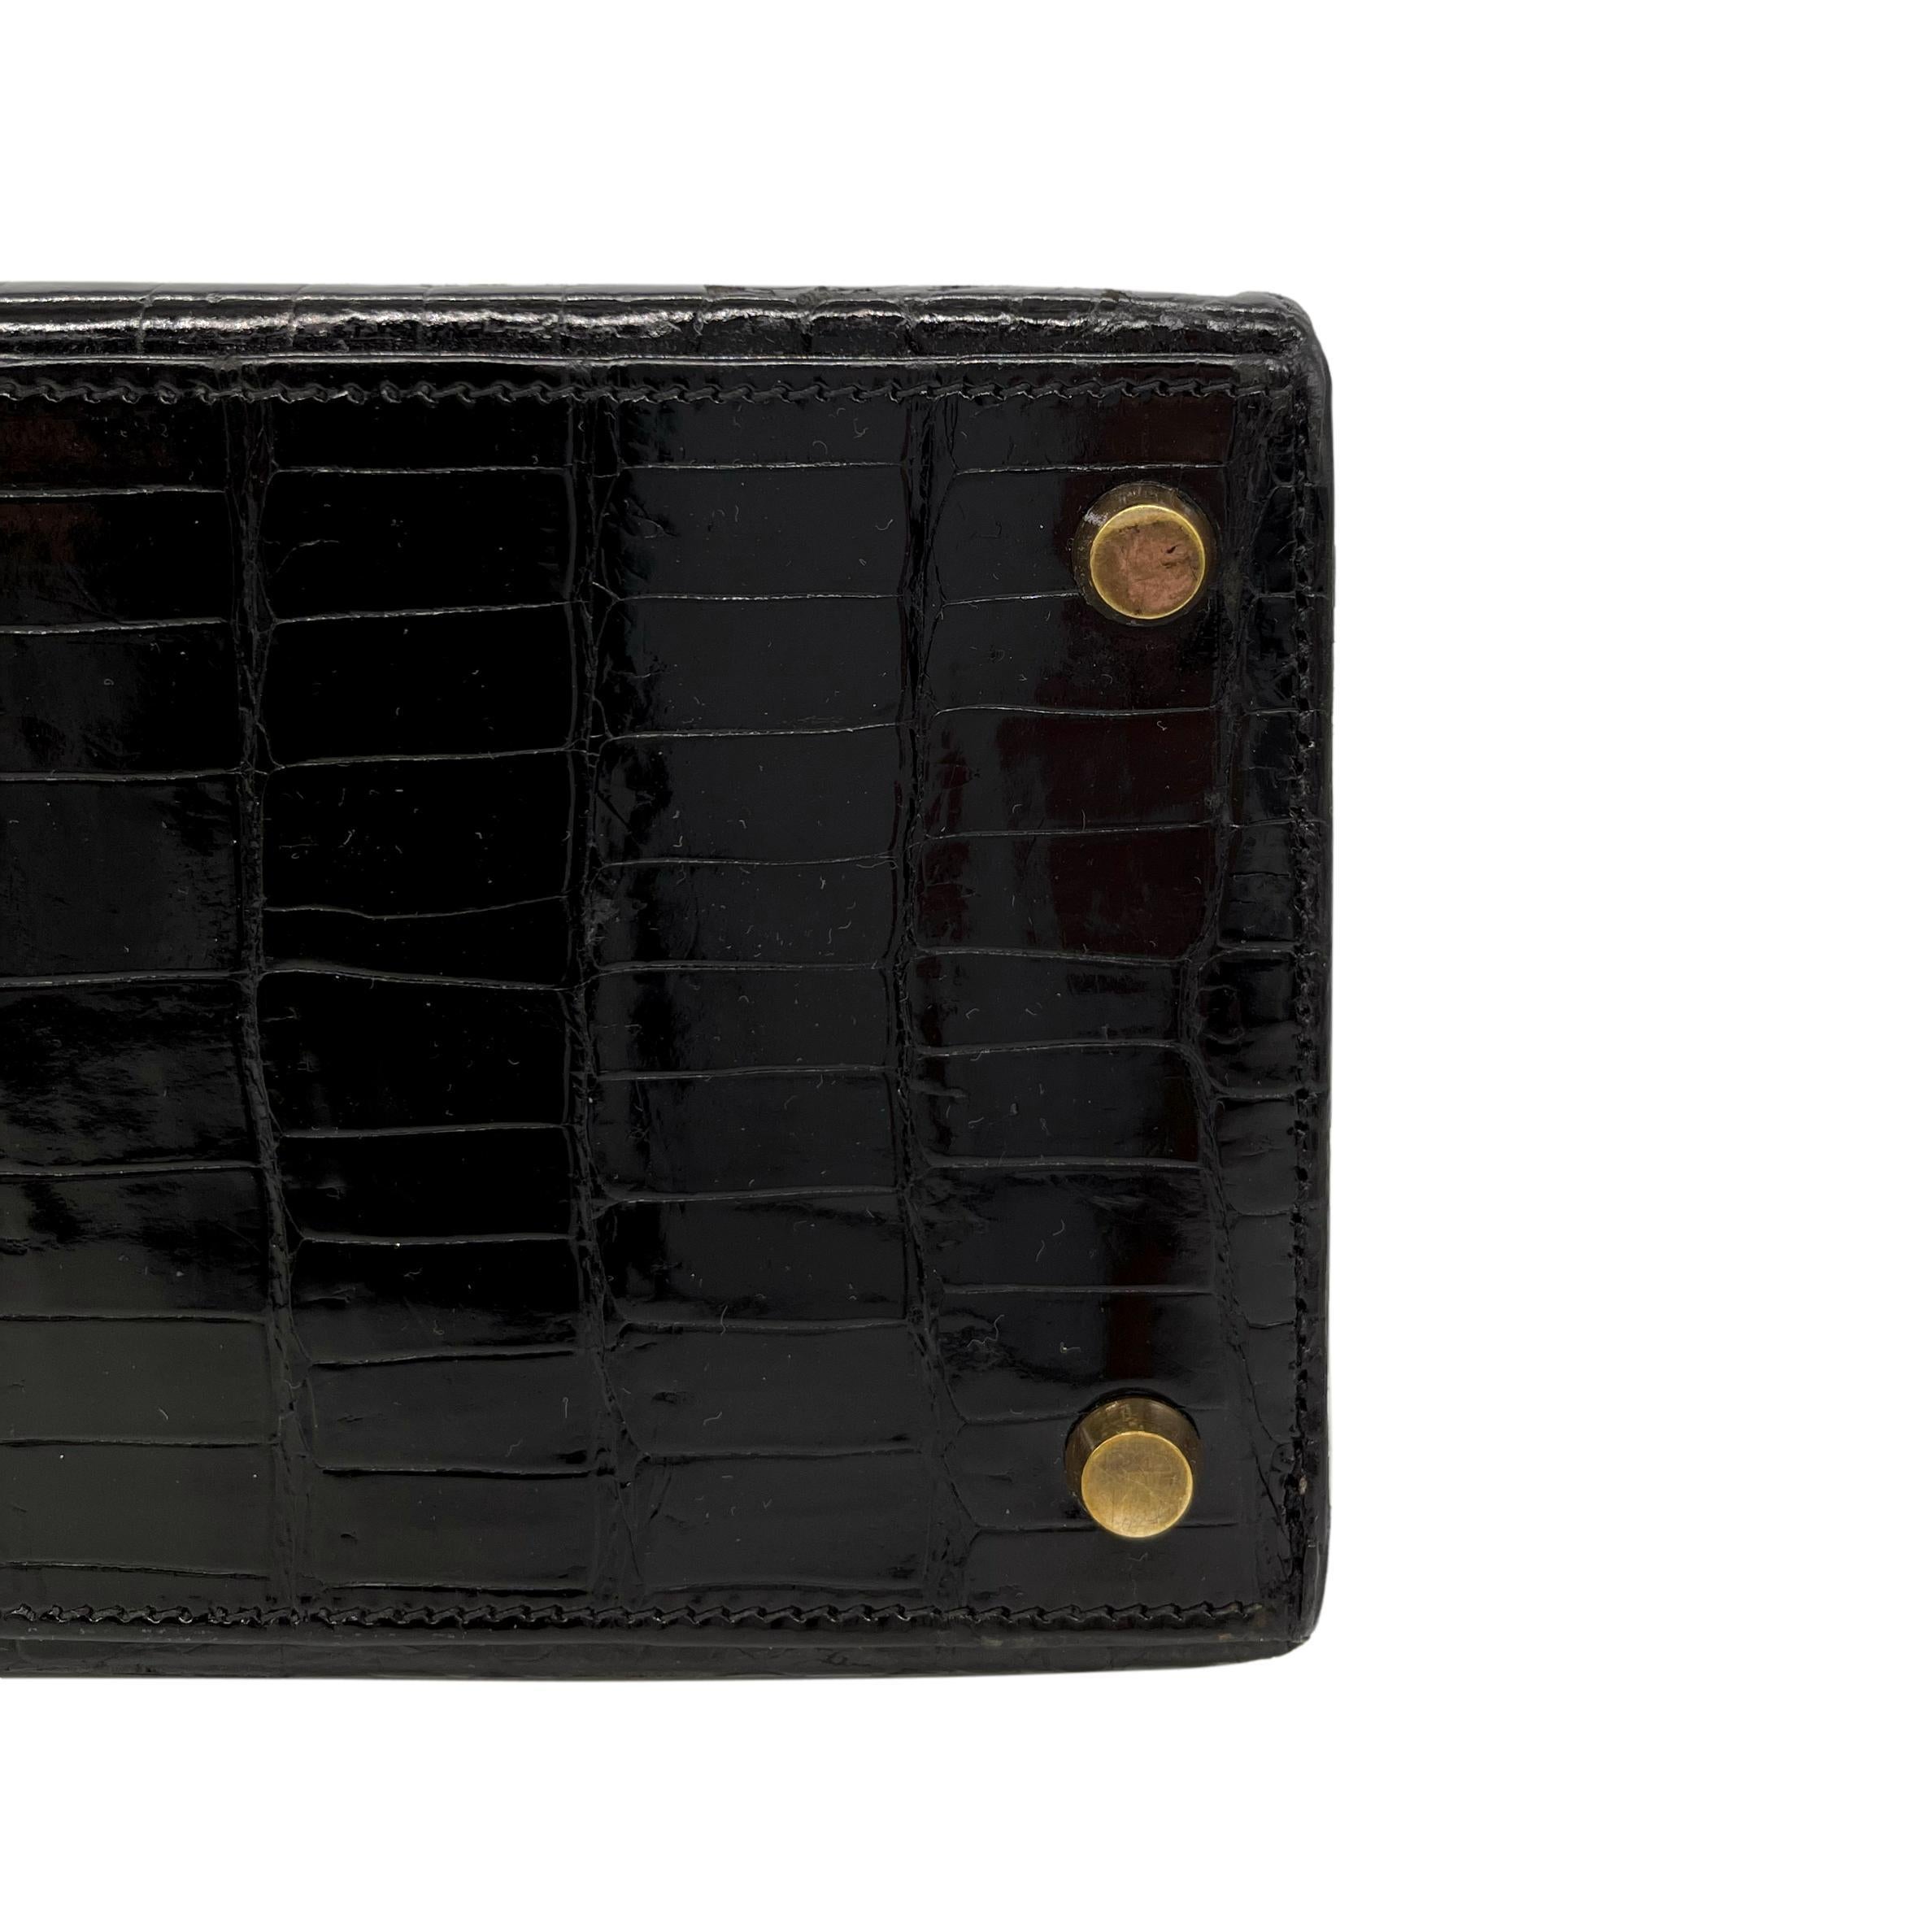 Hermès Shiny Black Porosus Crocodile Kelly Bag with Gold Hardware 28, 1940. For Sale 9